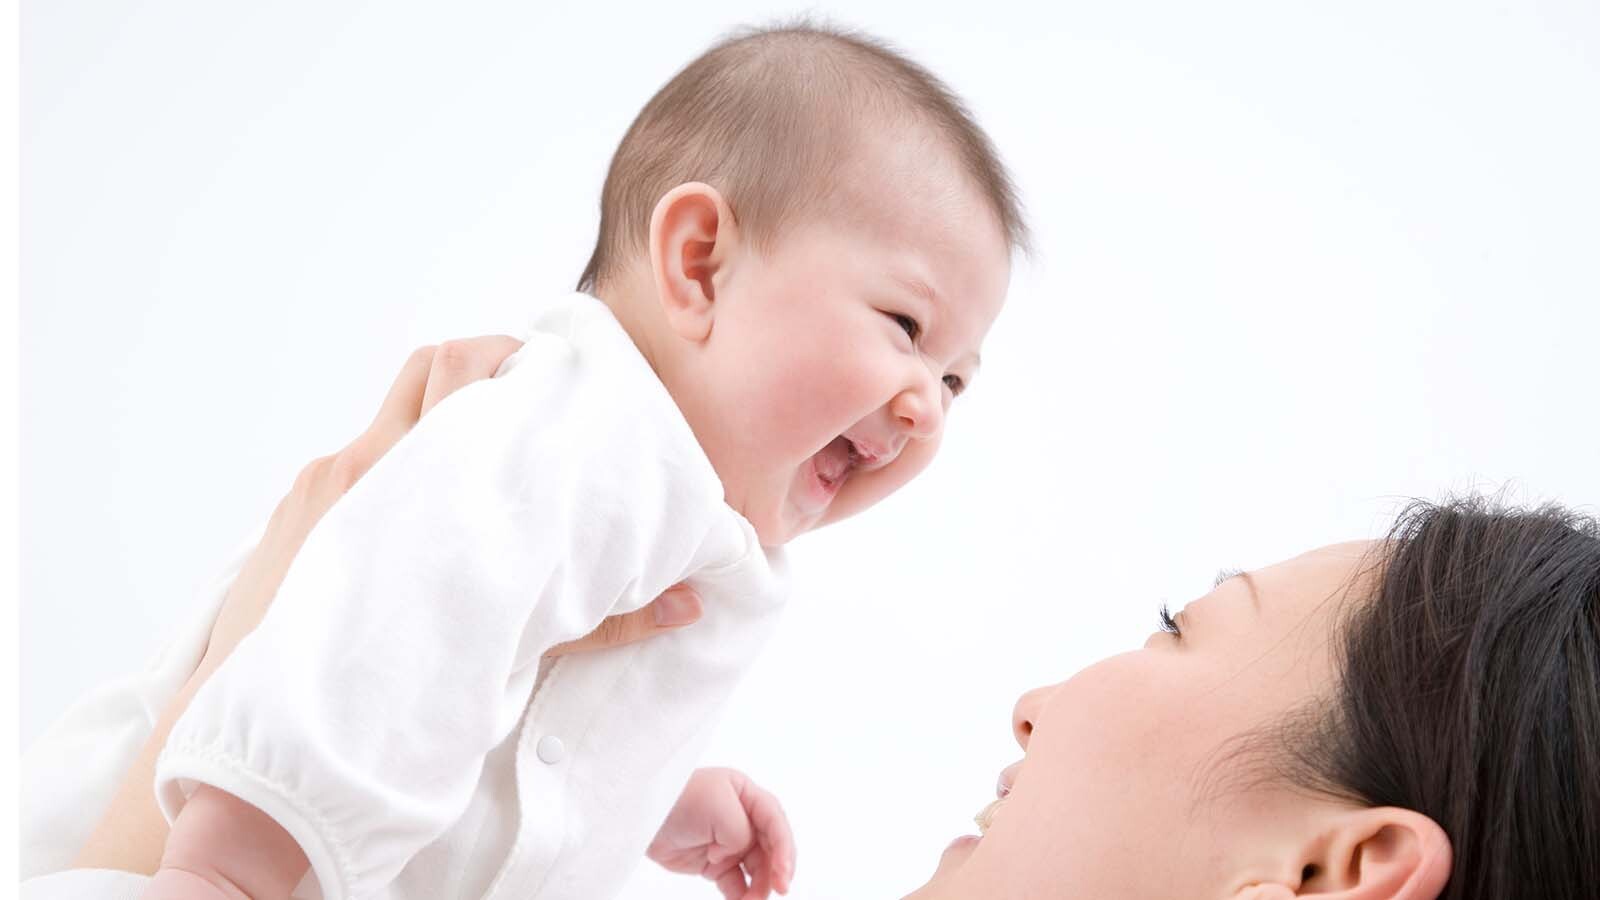 4_Kikoe Intervention - Laughing baby.jpg